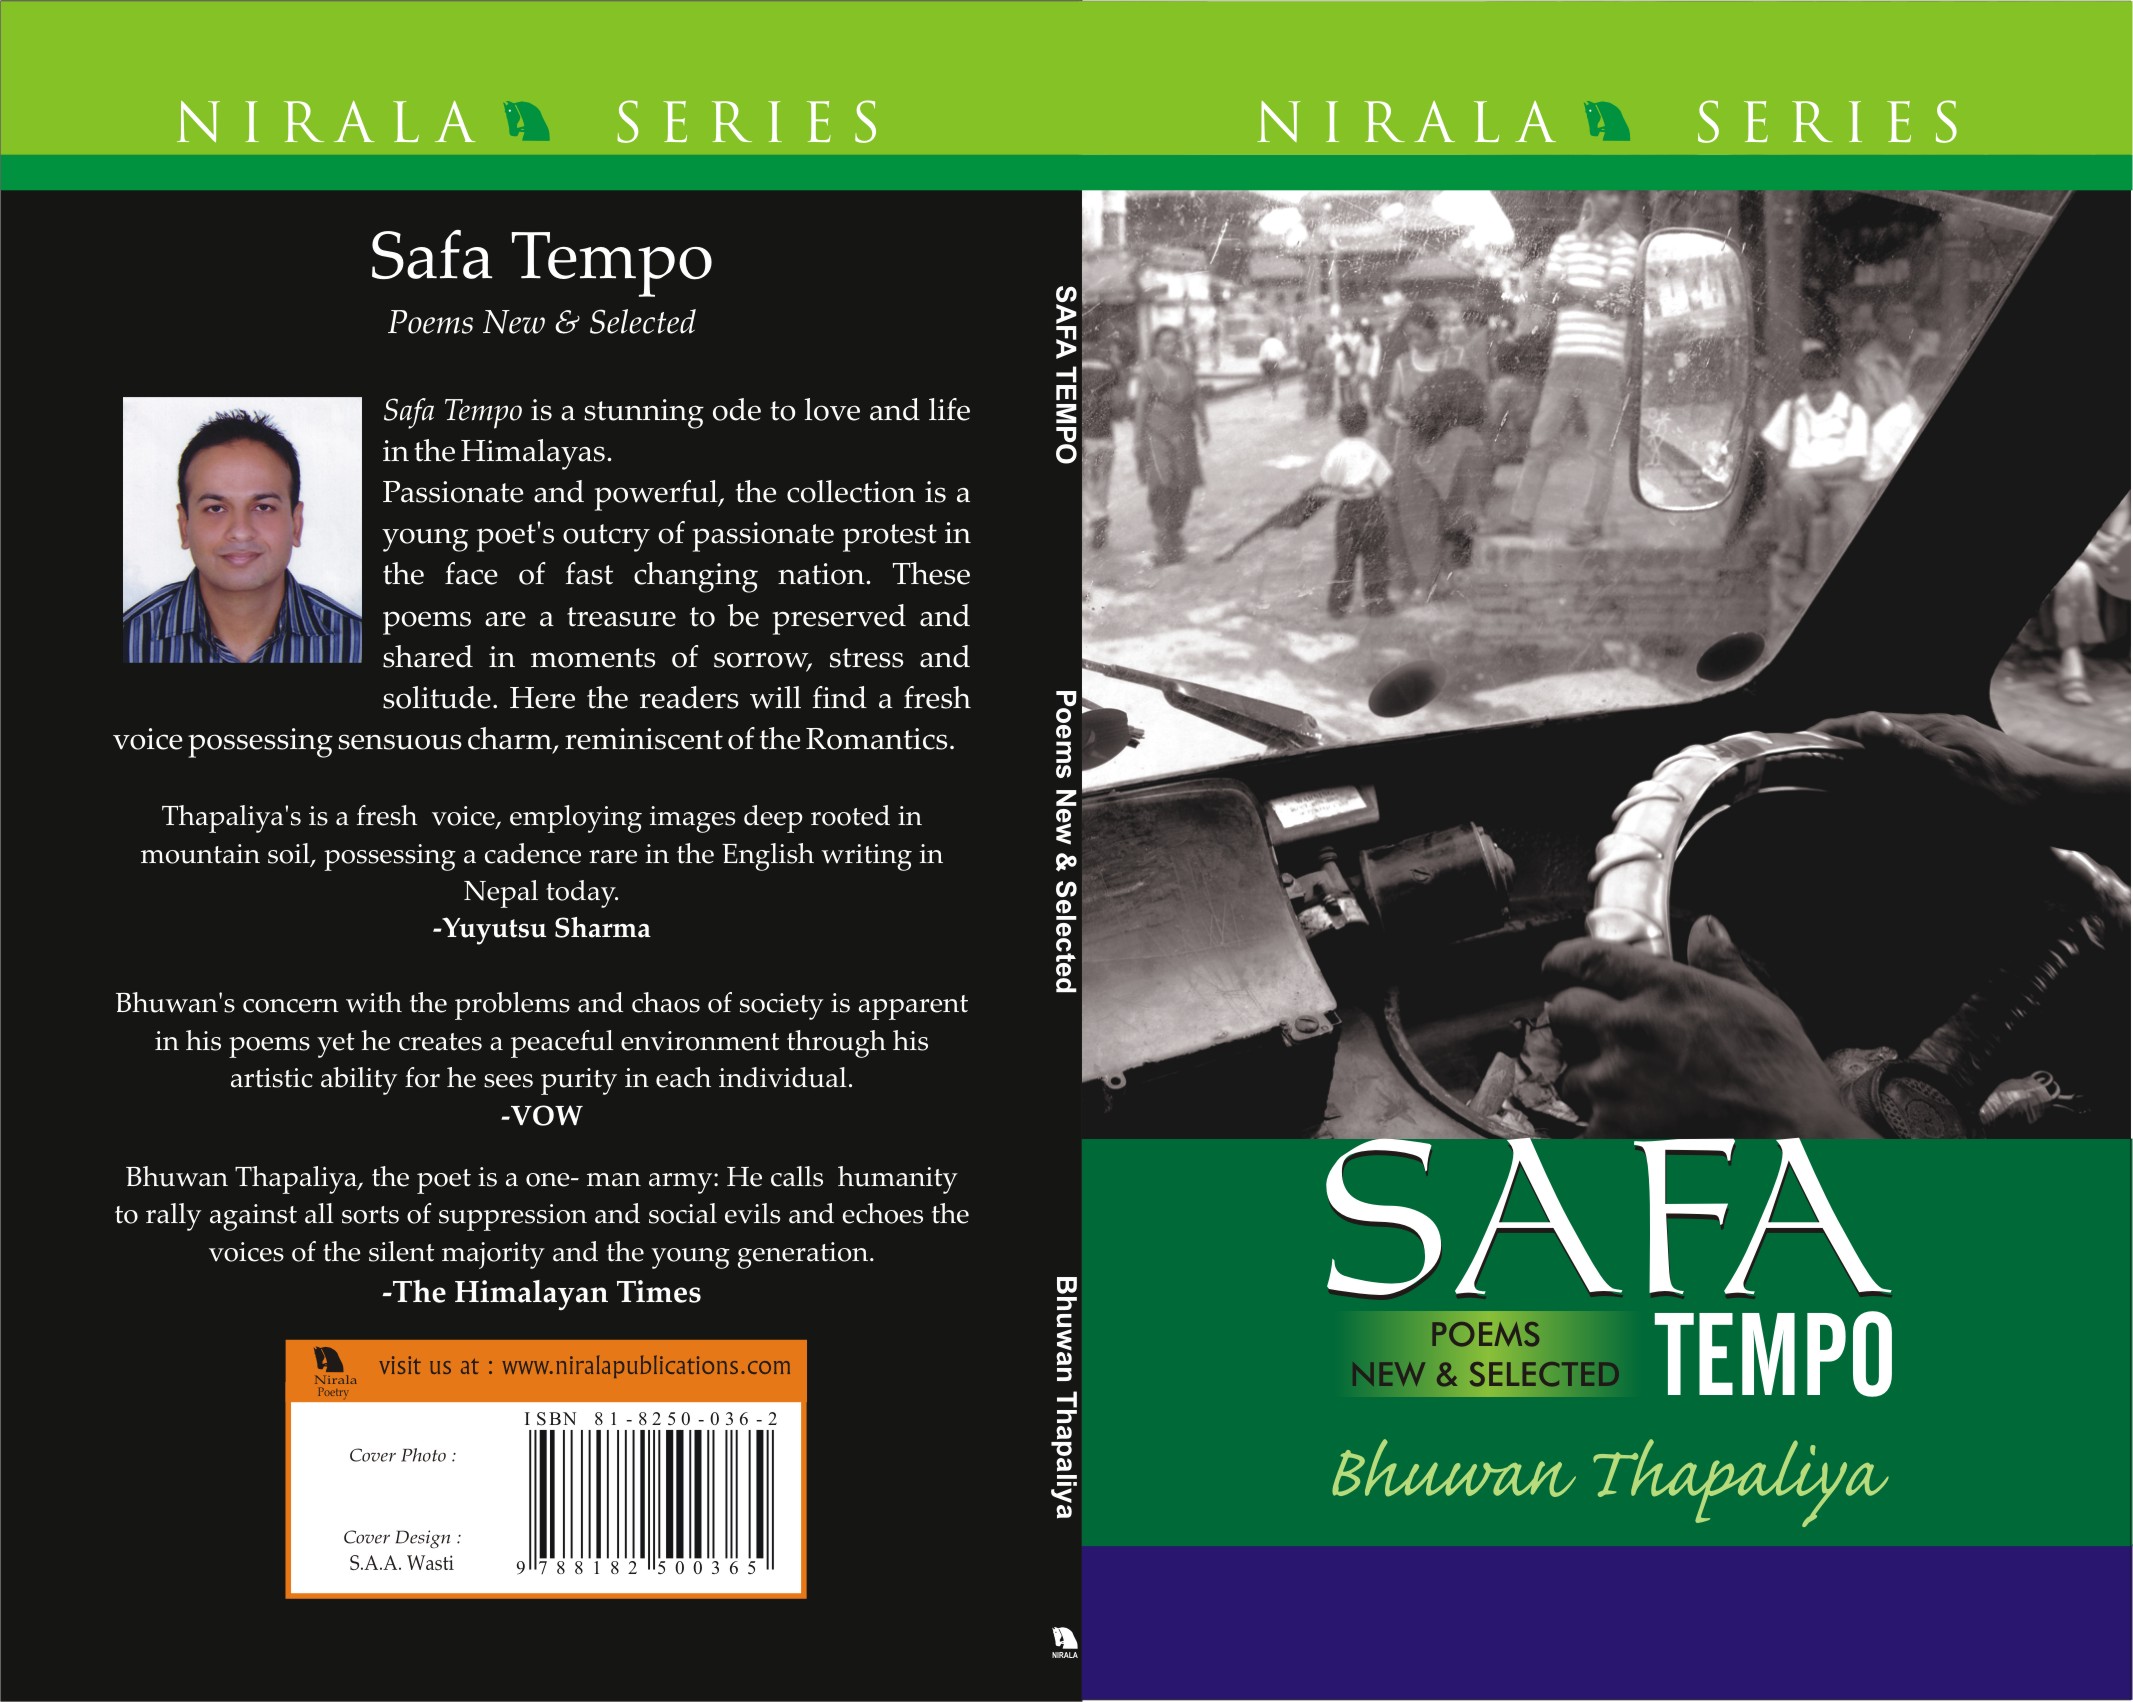 Safa Tempo: Poems New and Selected by Bhuwan Thapaliya